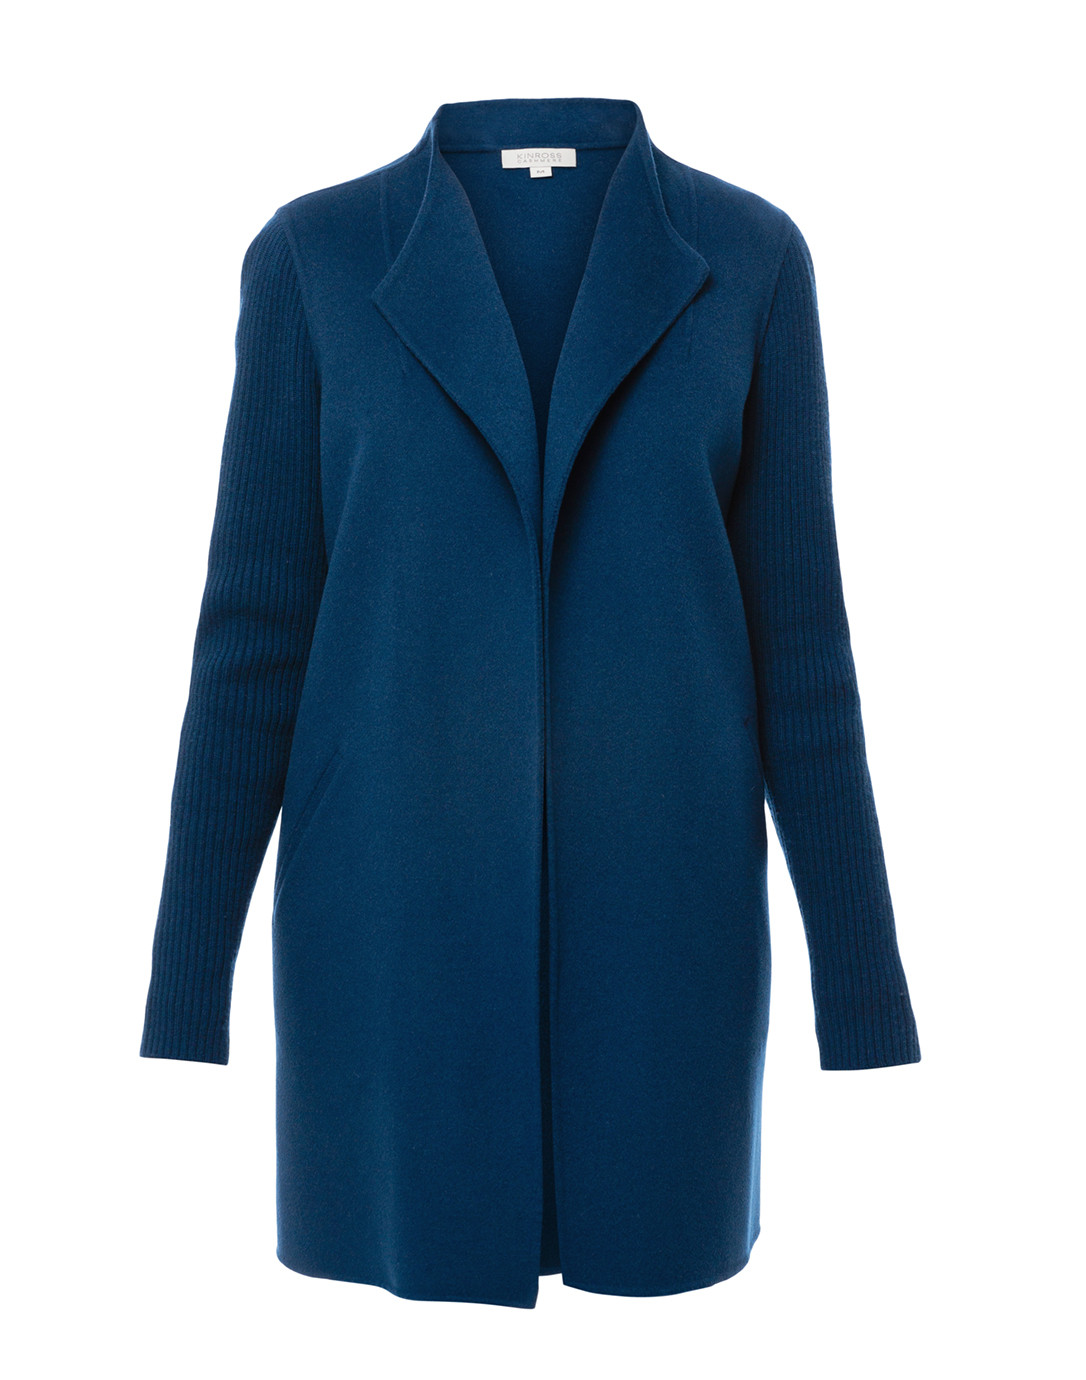 Winter Teal Wool Cashmere Coat | Kinross